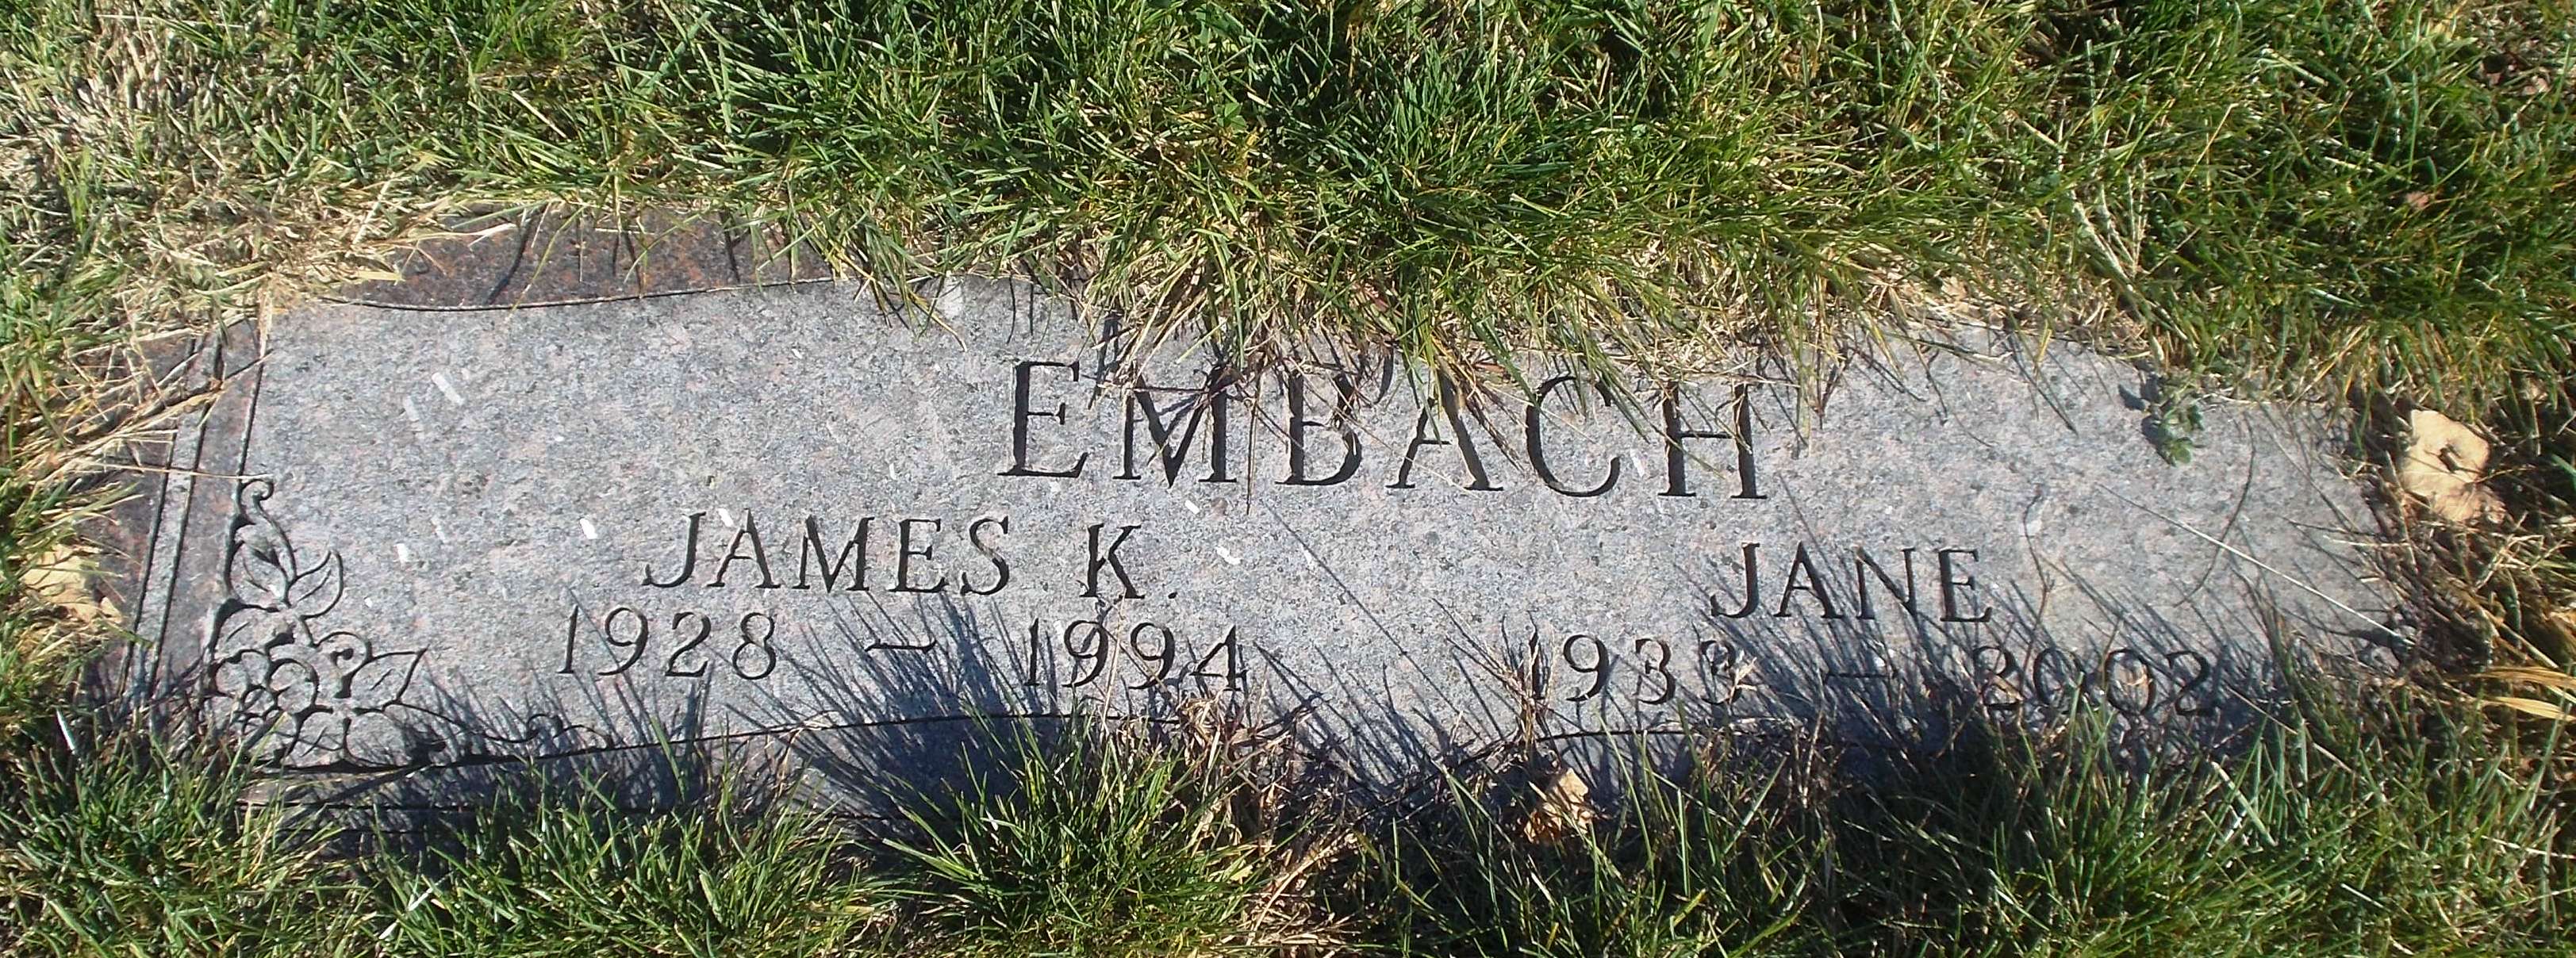 Jane Embach